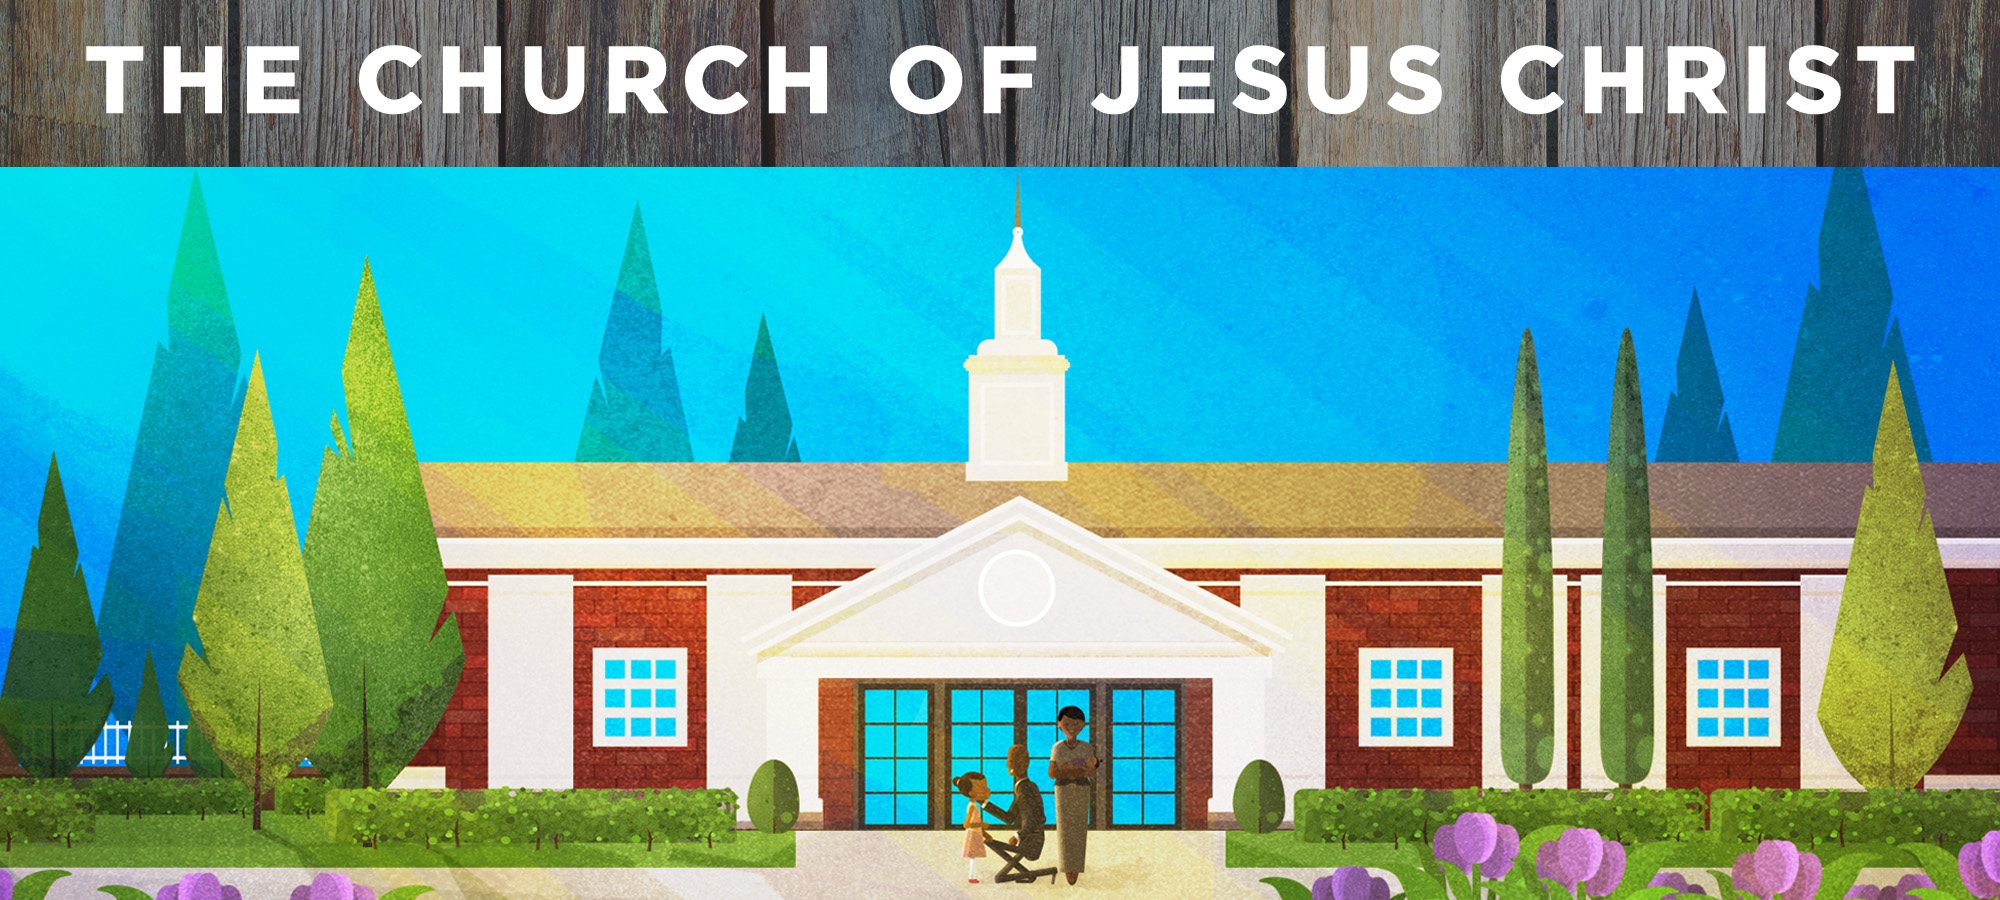 The_Church_Of_Jesus_Christ.jpg